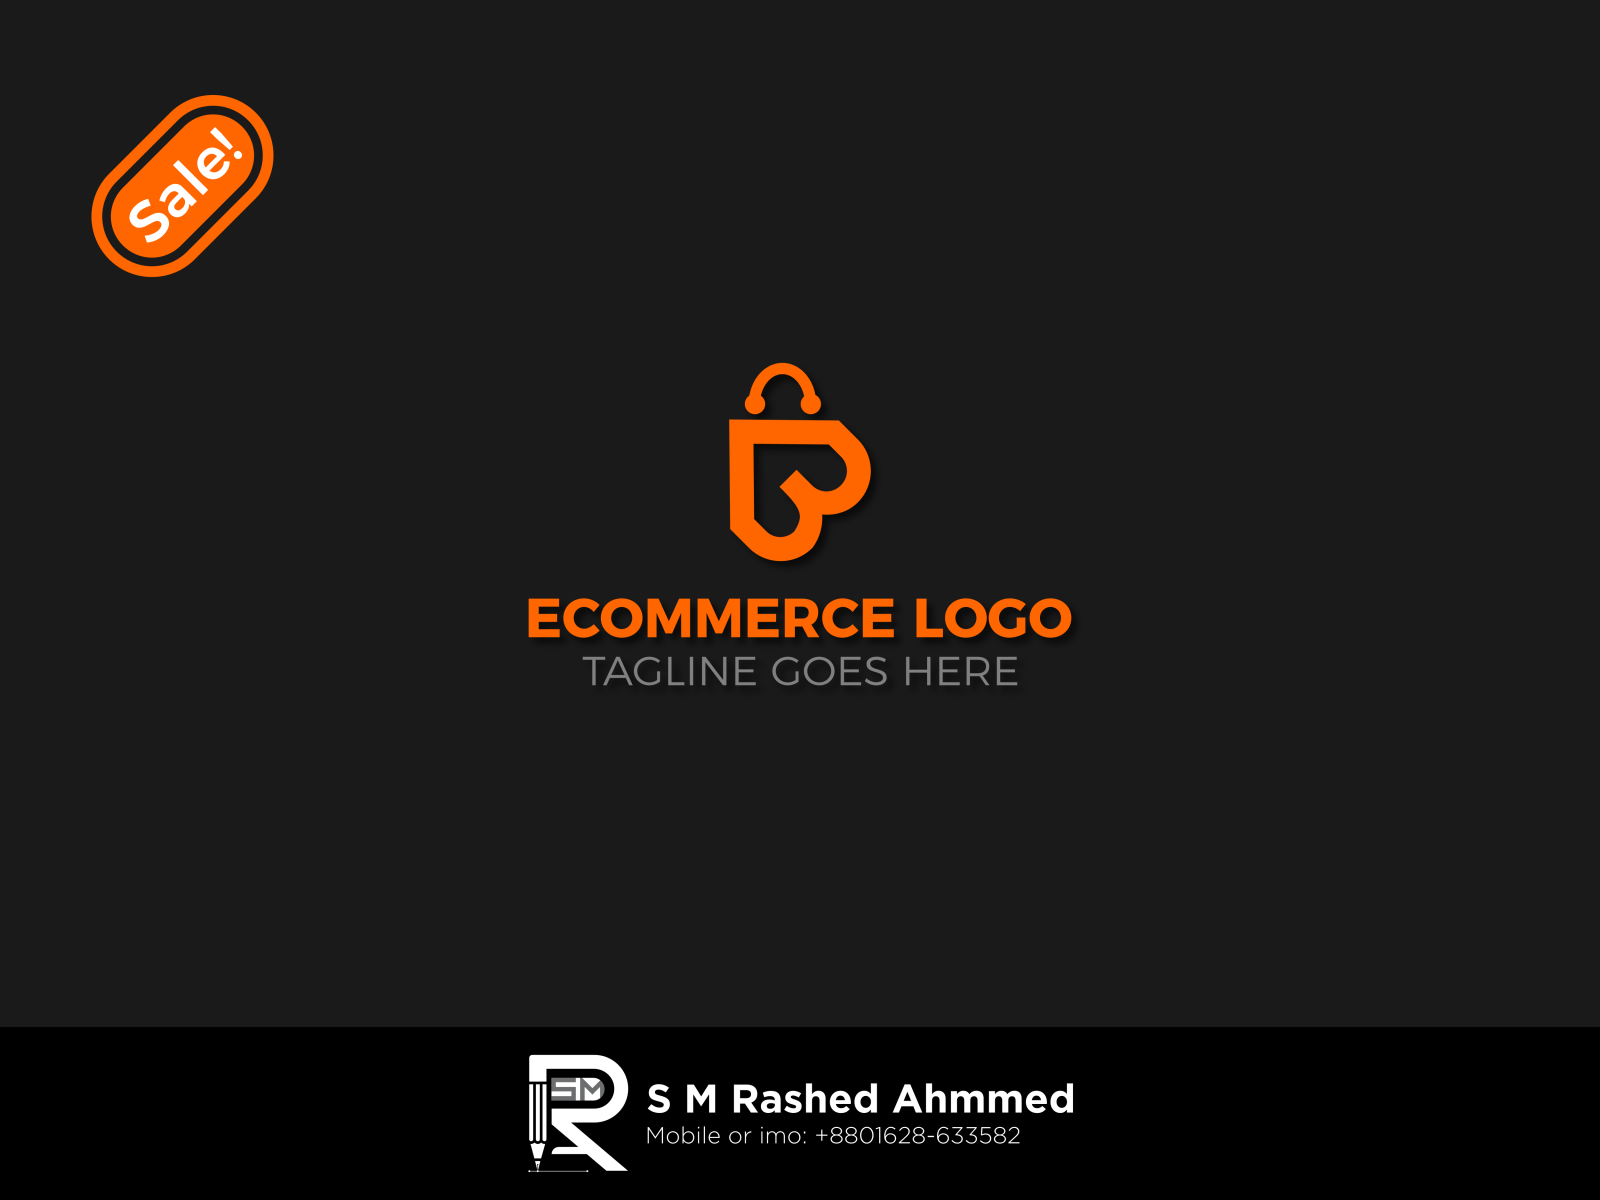 Logo Ecommerce Vector Design Images, Ecommerce Logo, Online Shop, City  Shop, Town Shop PNG Image For Free Download